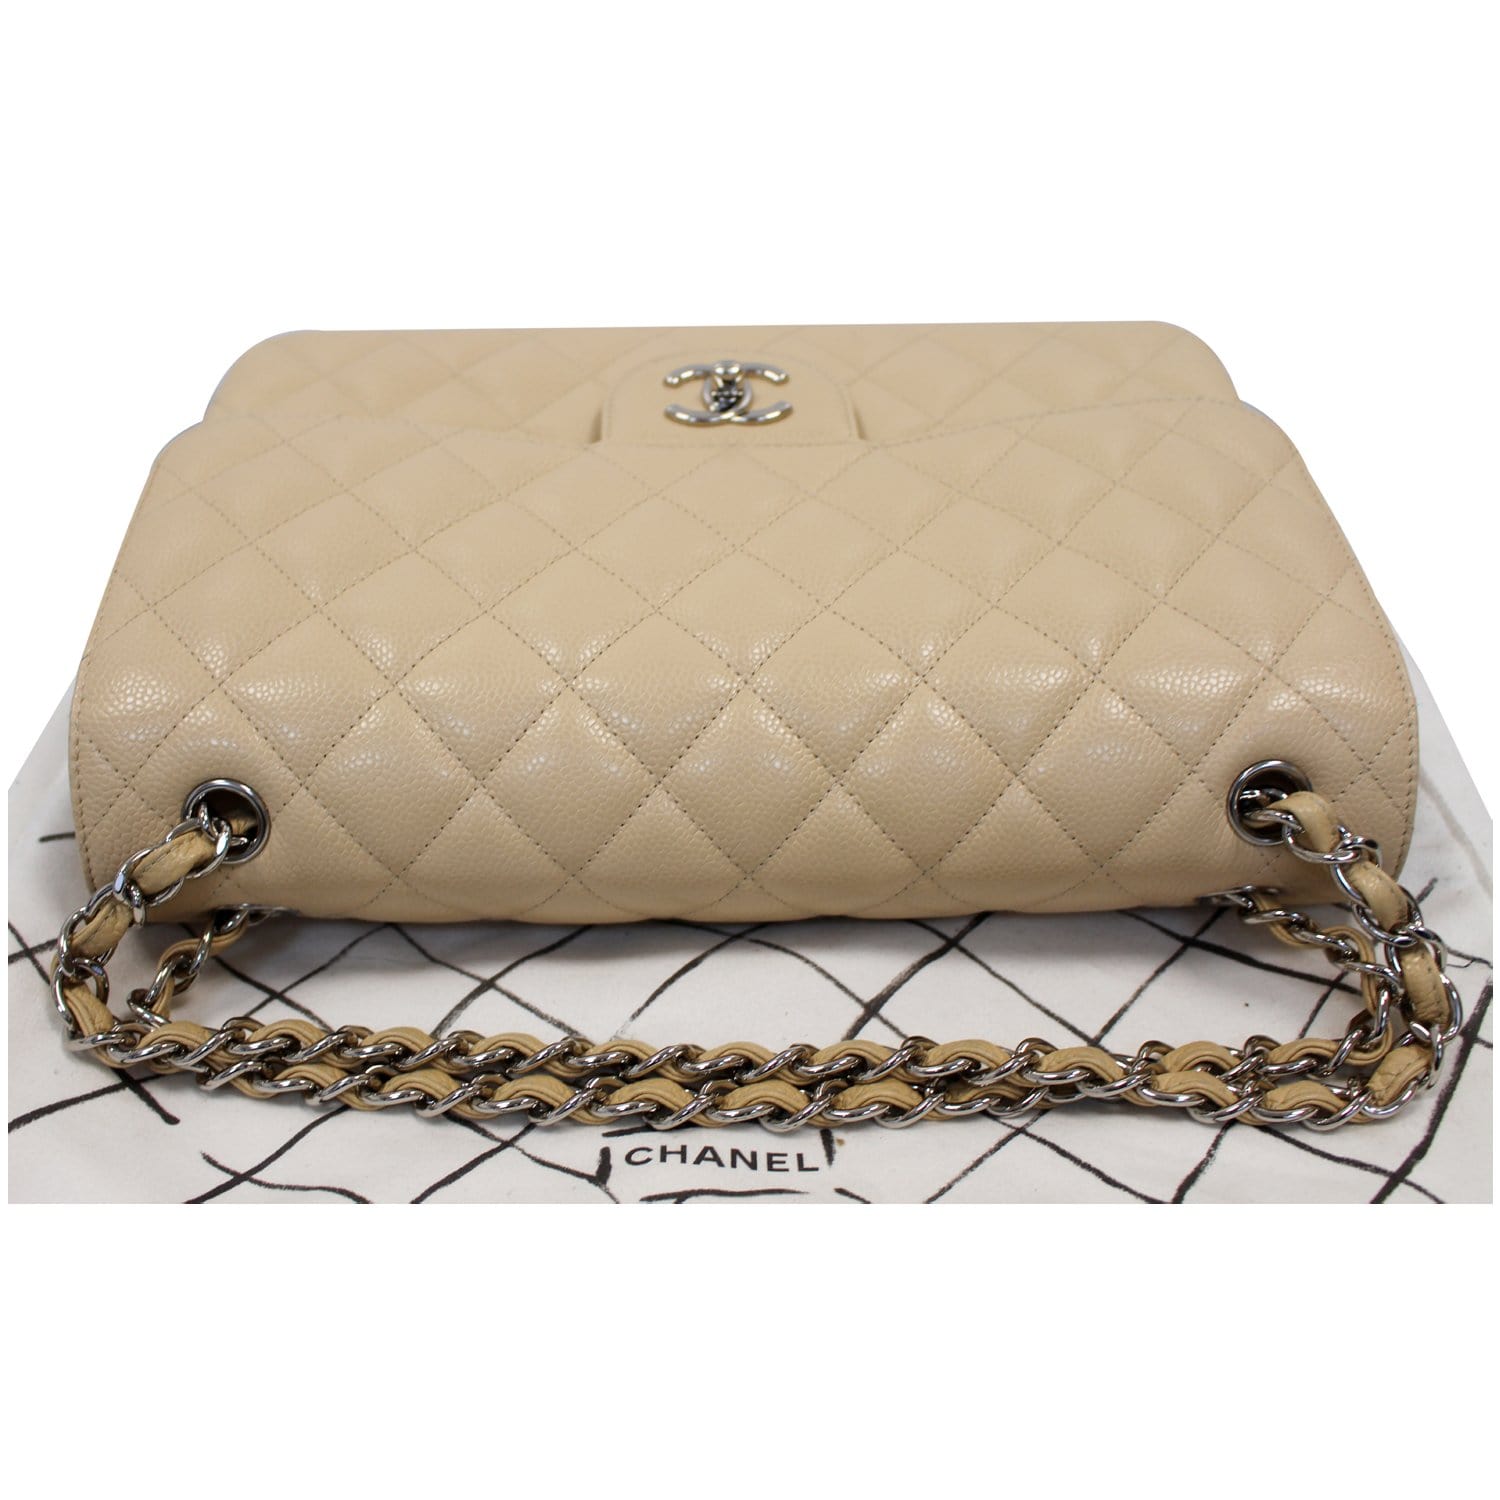 Chanel Jumbo Double Flap Caviar Leather Shoulder Bag Beige